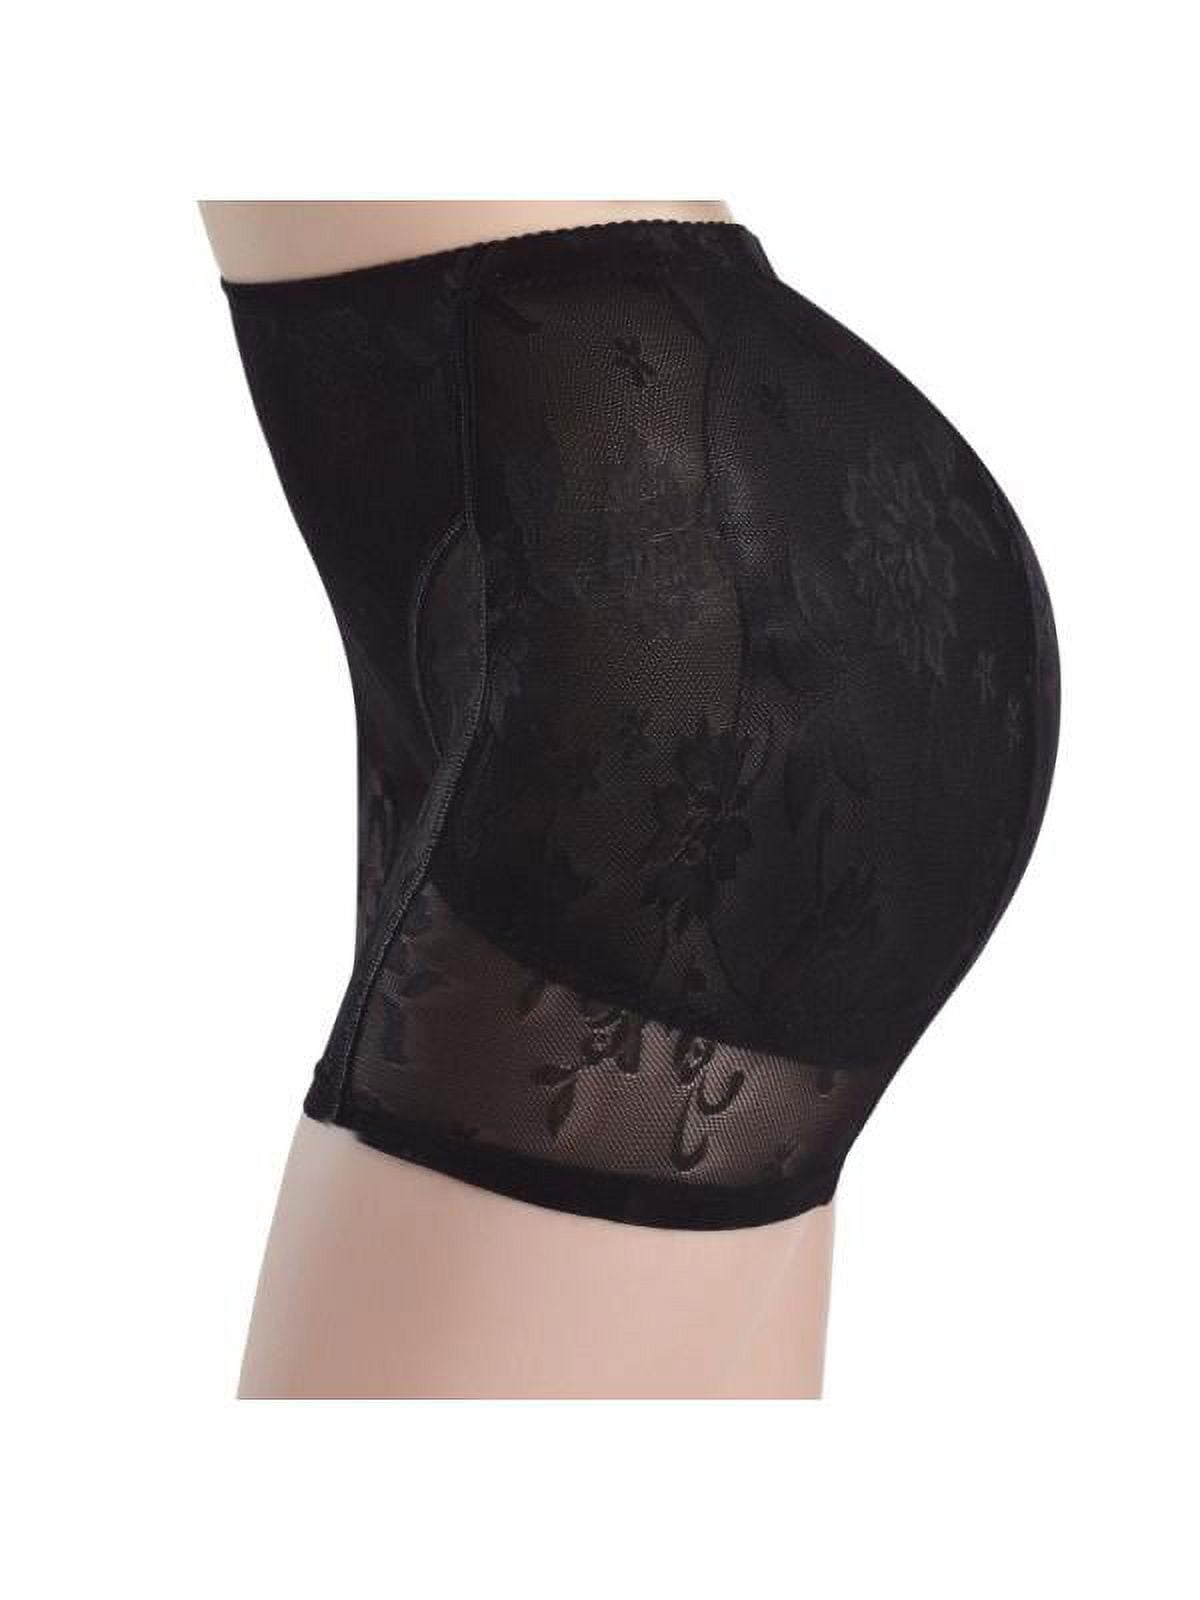  TIICHOO Womens Period Underwear Heavy Flow High Waisted  Period Panties Menstrual Postpartum Underwear Leakproof 3 Pack